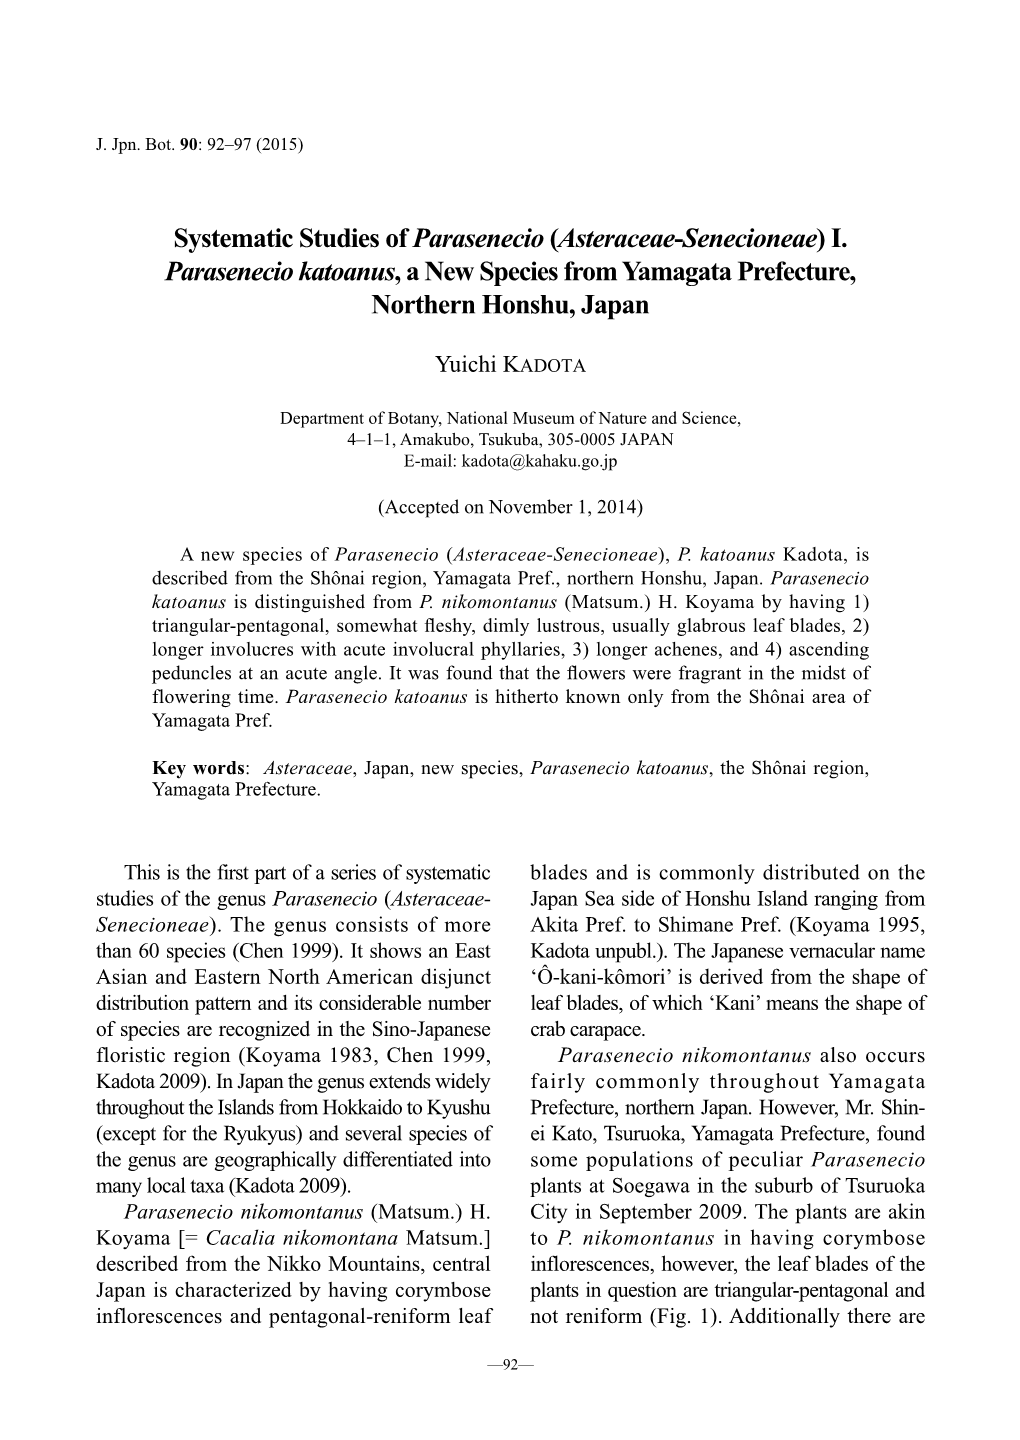 Systematic Studies of Parasenecio (Asteraceae-Senecioneae) I